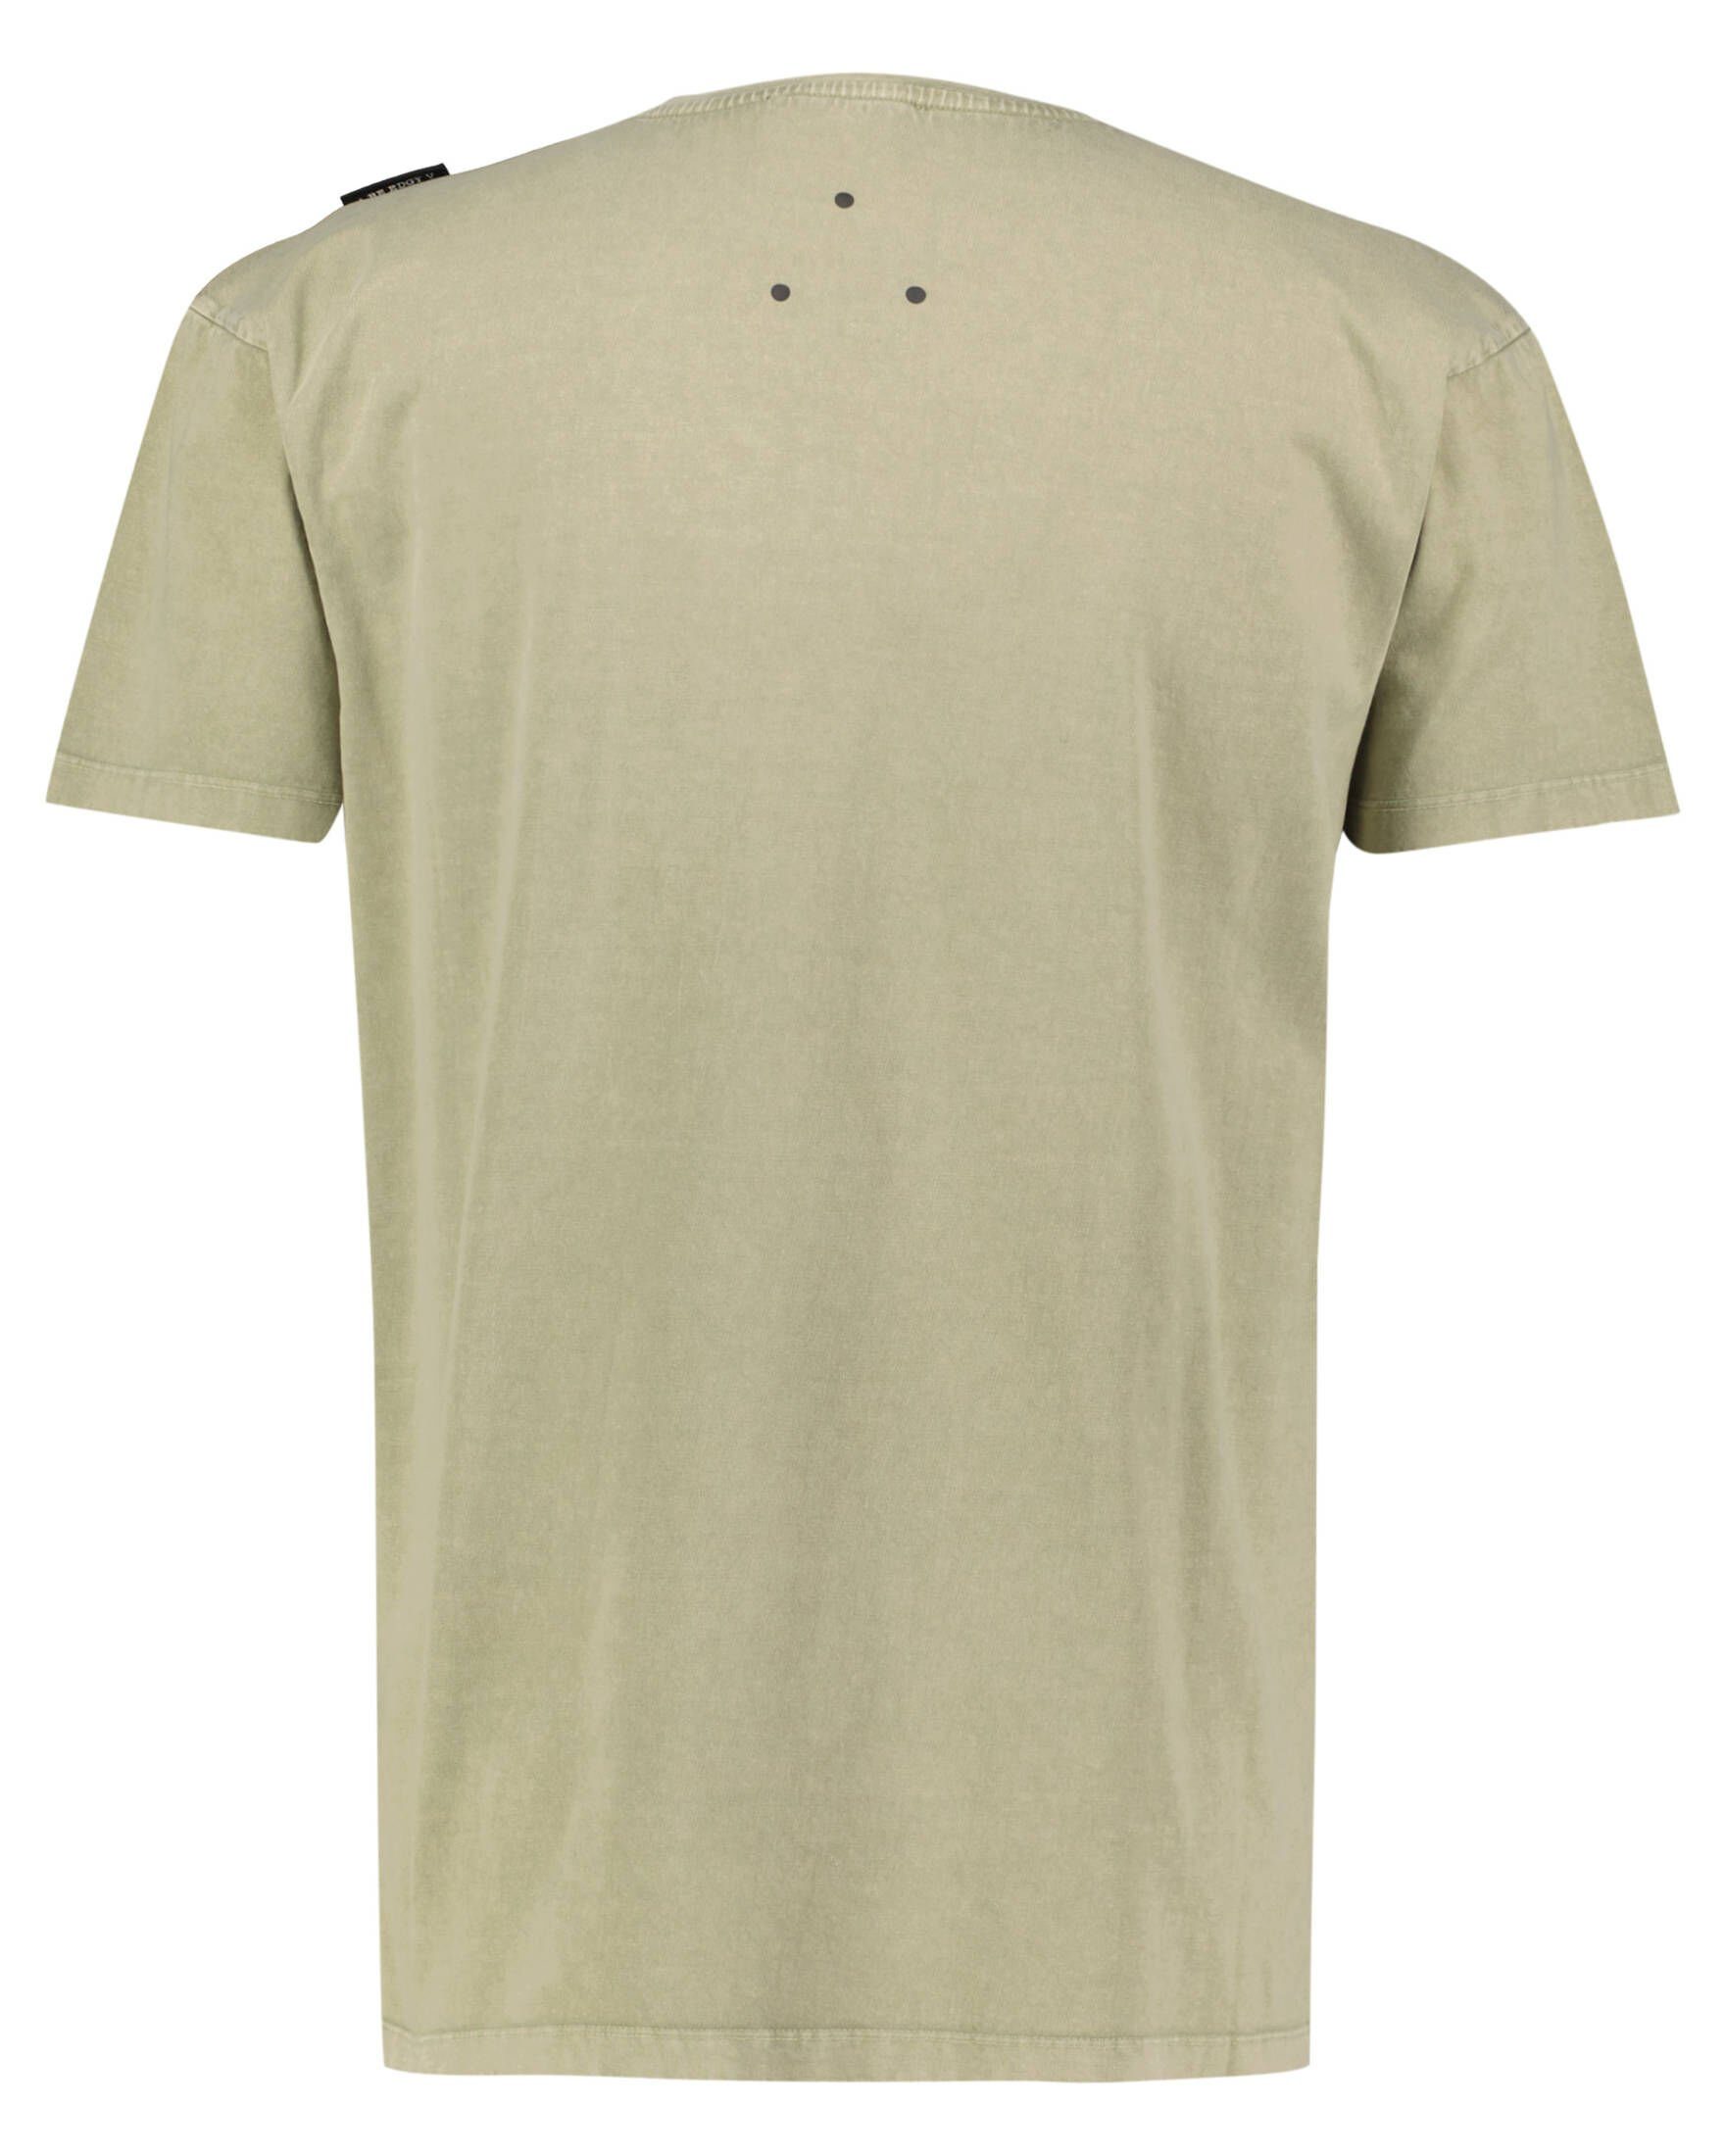 BE (1-tlg) T-Shirt EDGY grün (43) T-Shirt Herren BEPAULUS